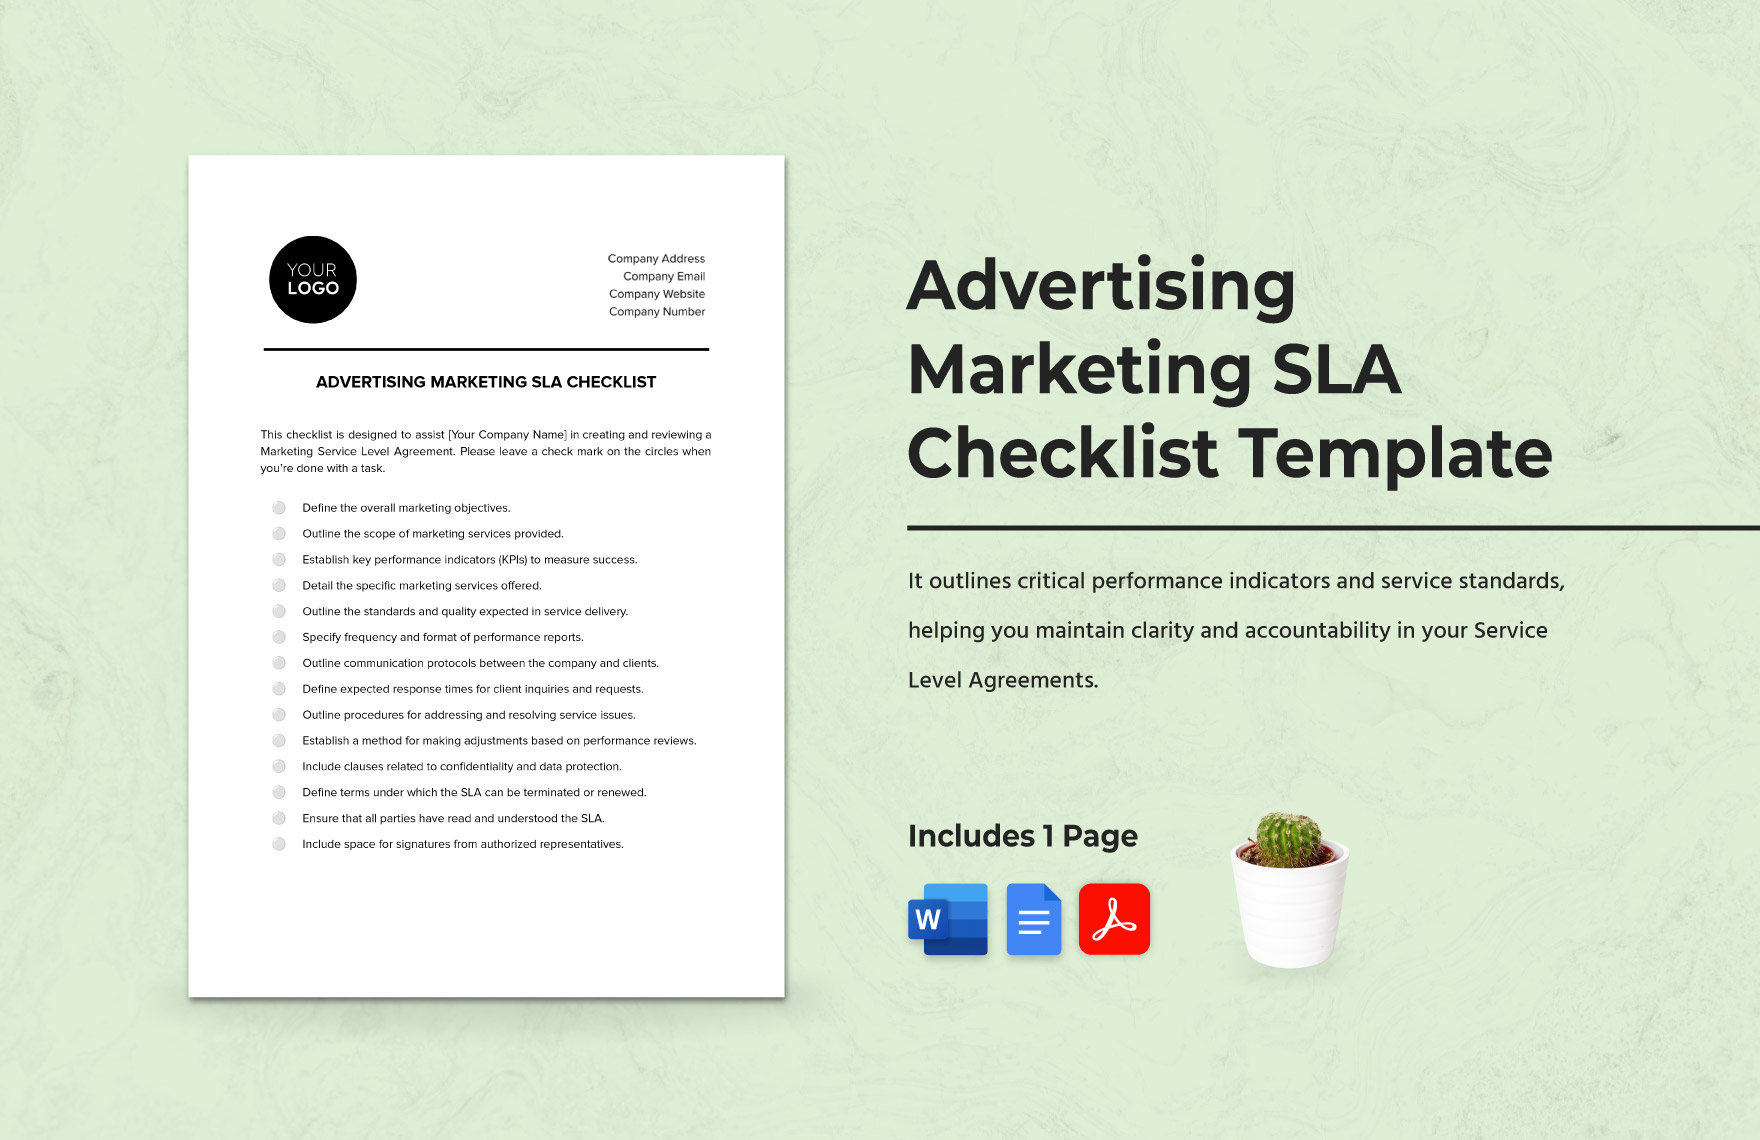 Advertising Marketing SLA Checklist Template in Word, Google Docs, PDF